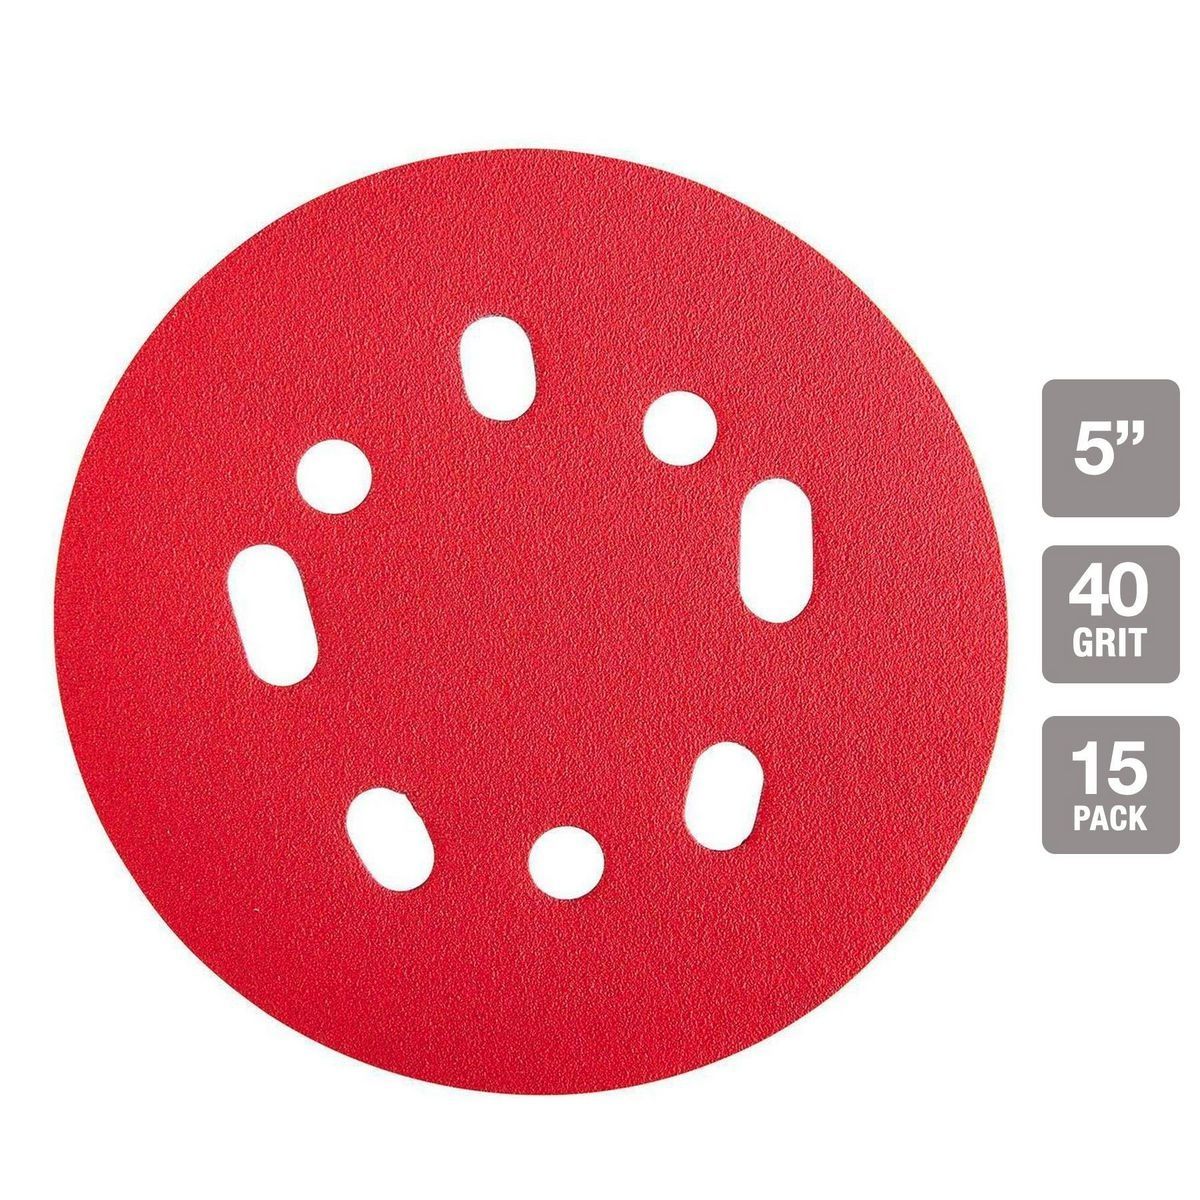 BAUER 5 in. 40 Grit Hook and Loop Universal Pattern Sanding Discs, 15 Pack